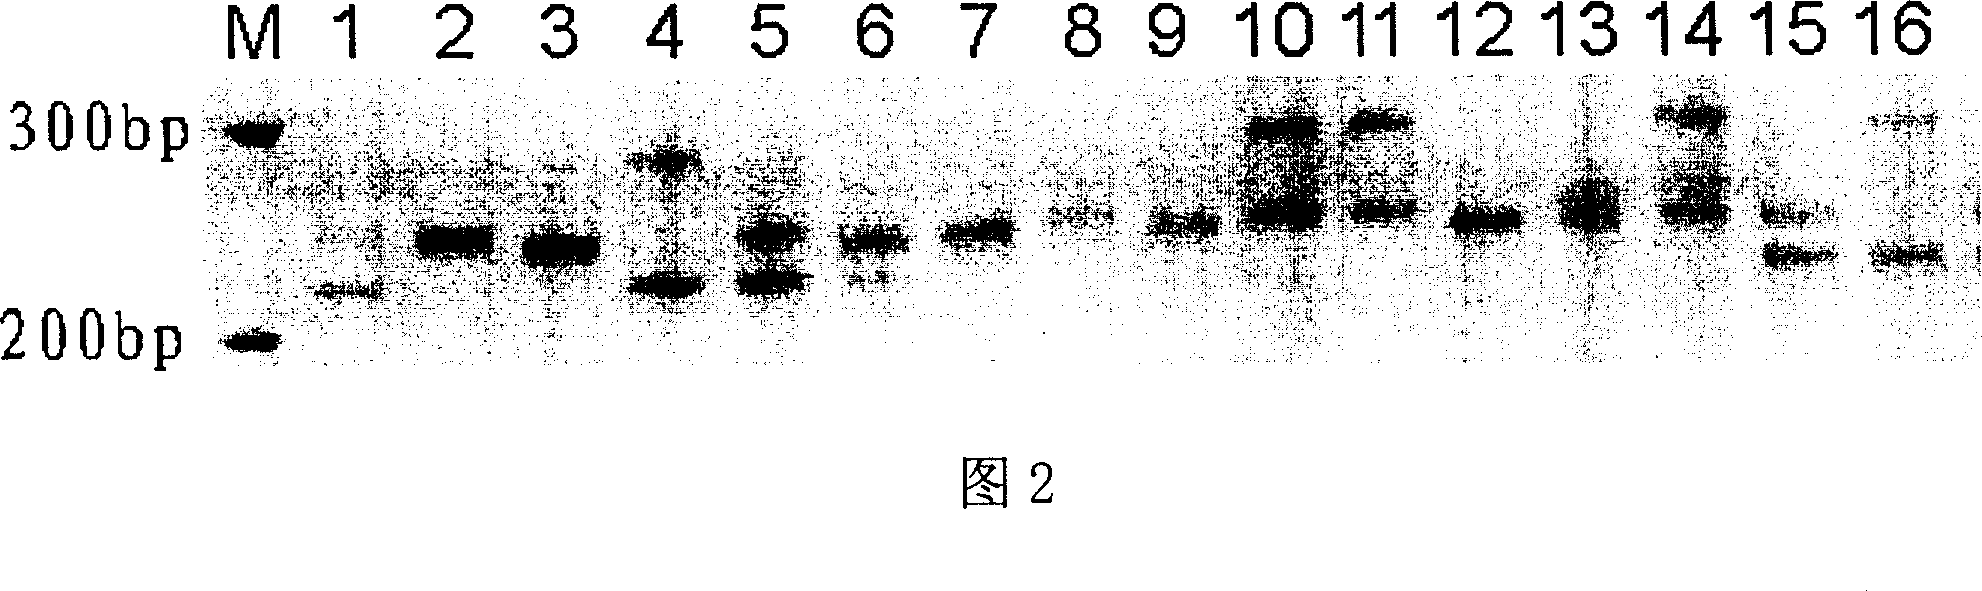 Bluish dogbean micro satellite DNA label